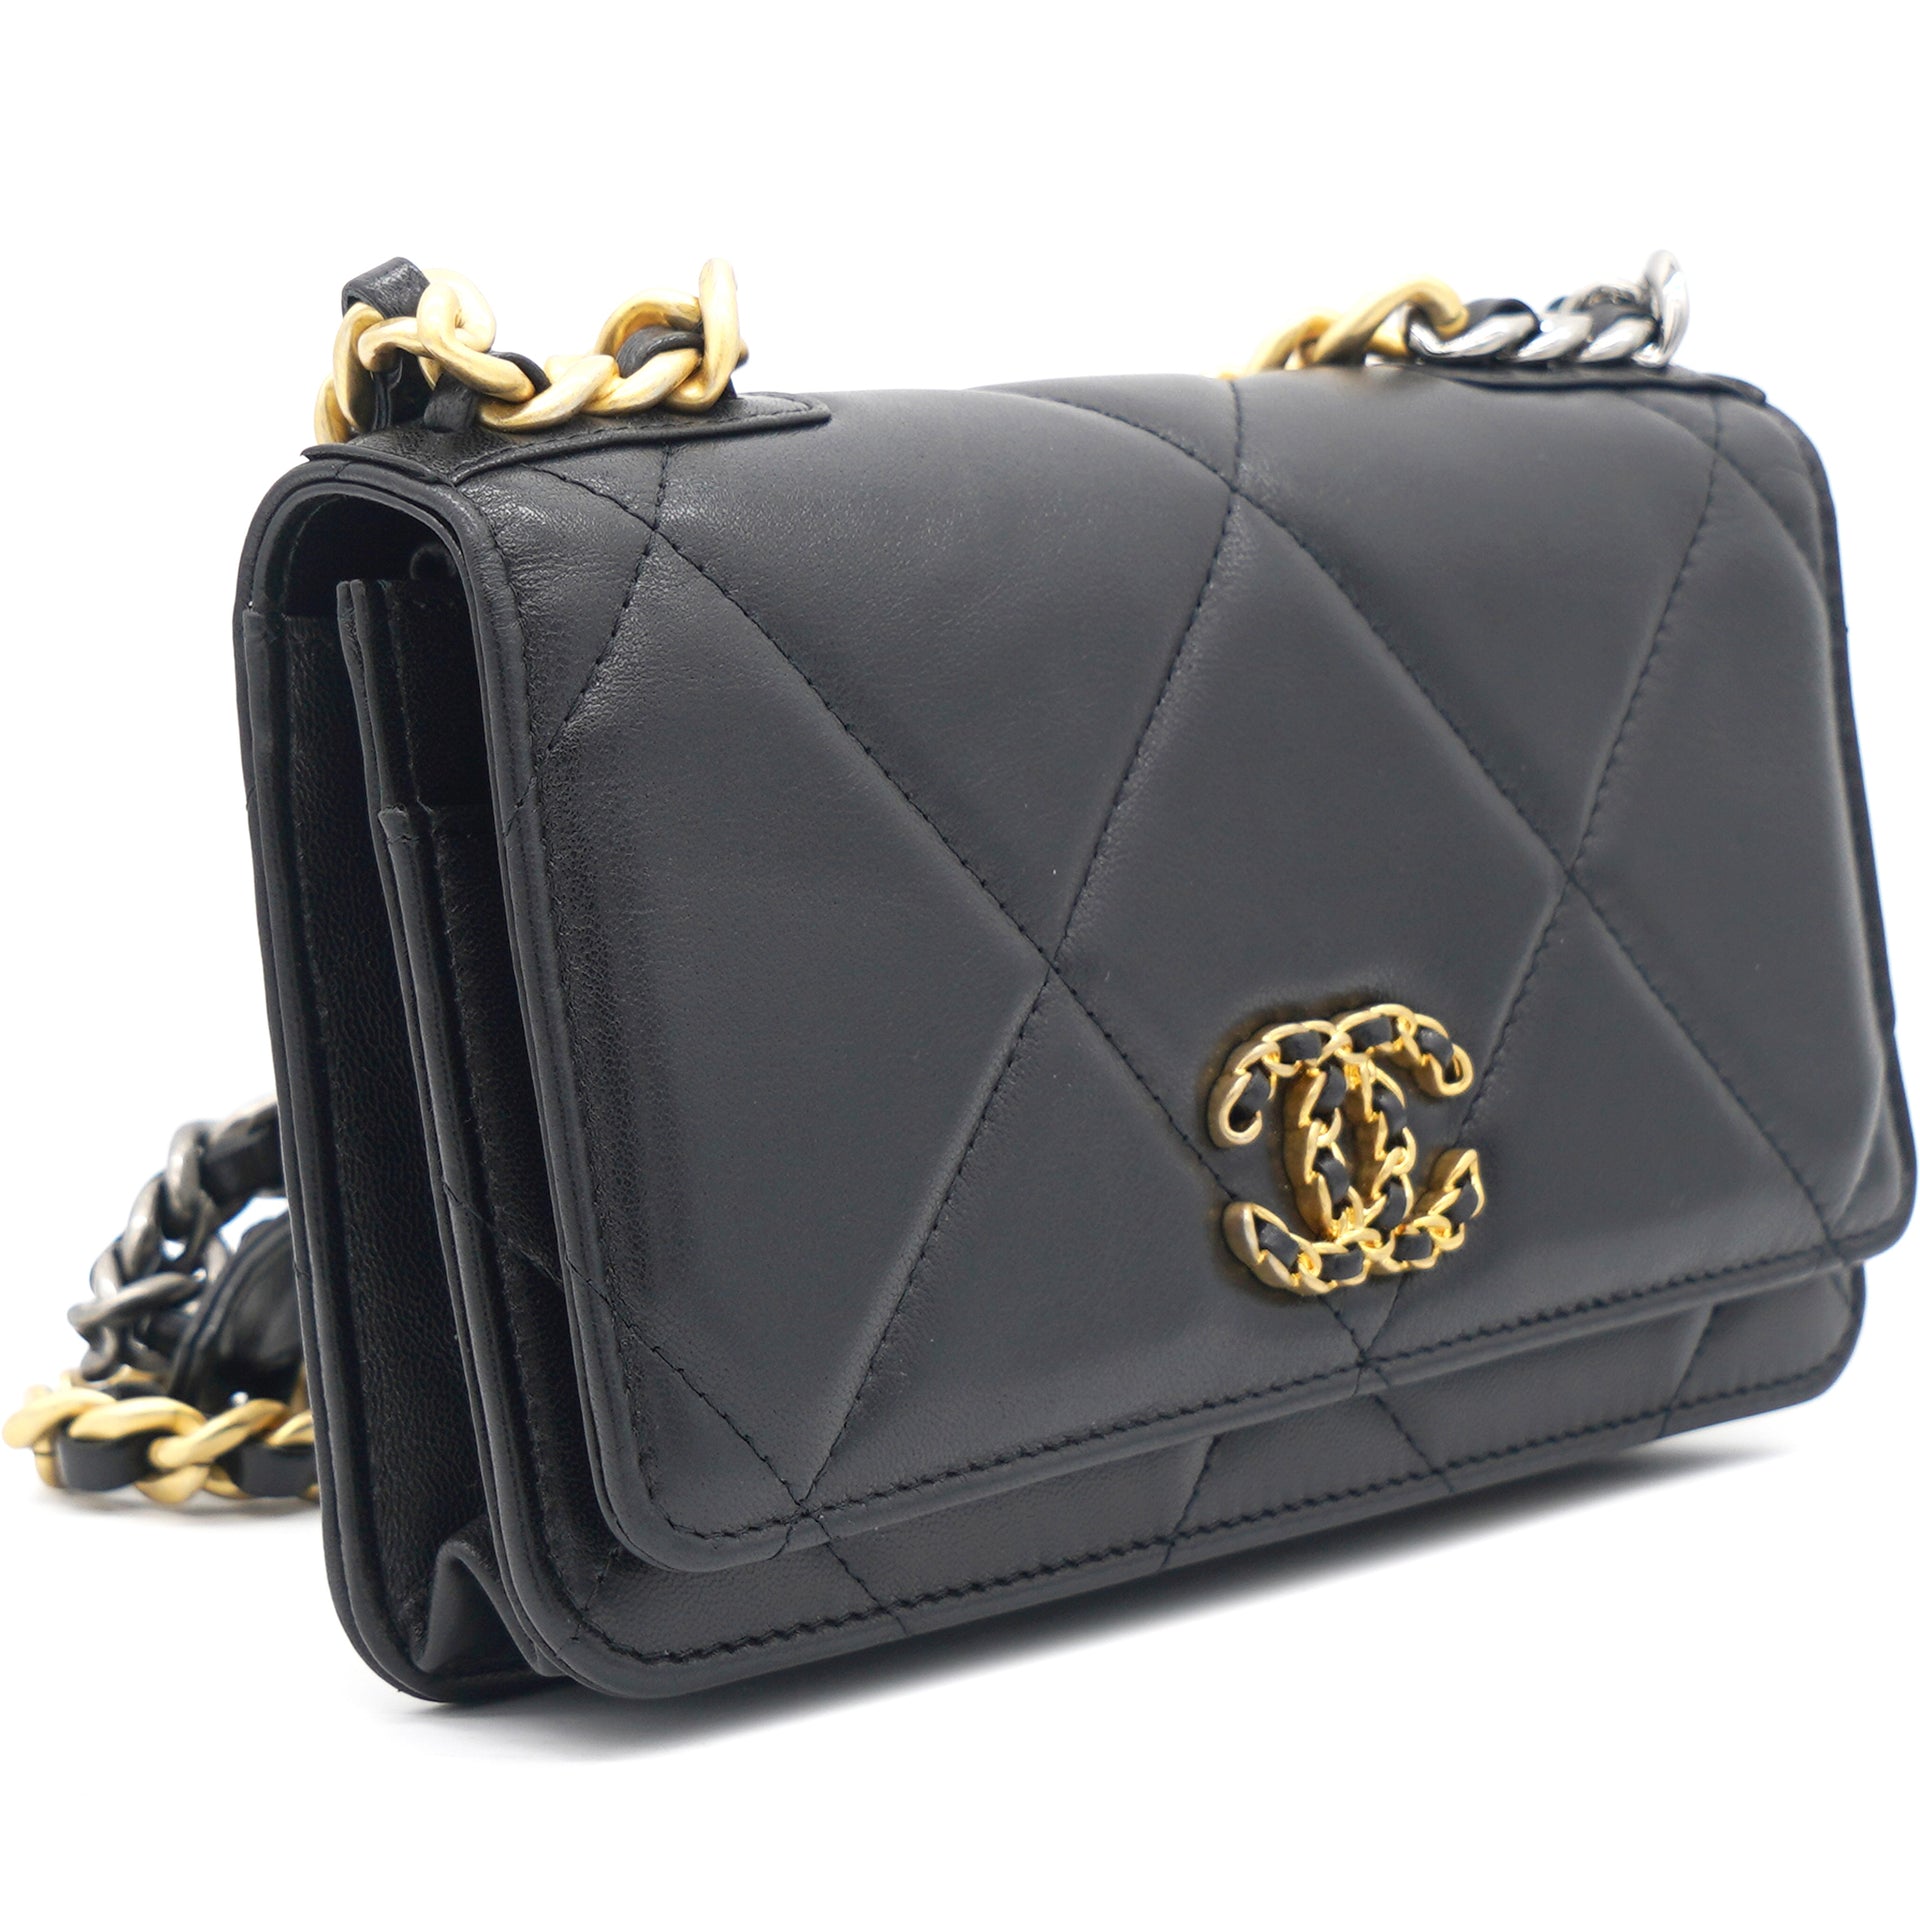 CHANEL Trendy CC Lambskin Leather Wallet On Chain Crossbody Bag Black